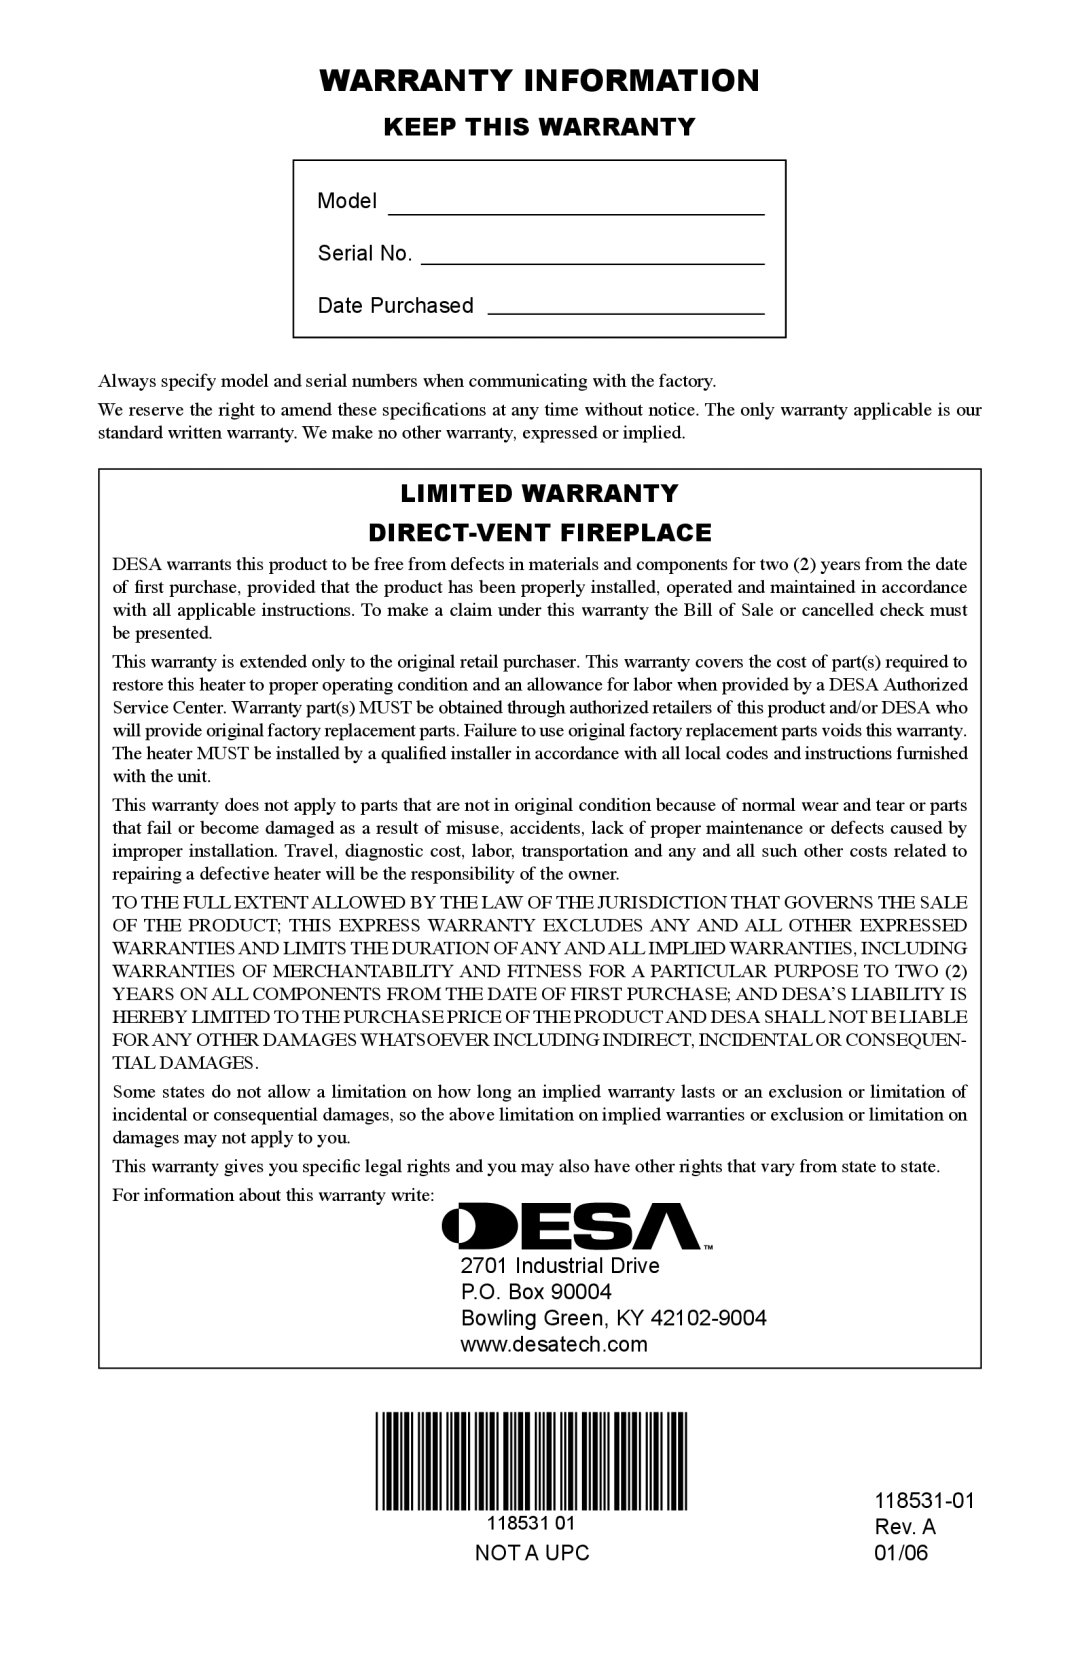 Desa CD36TN-M installation manual Warranty Information, Keep This Warranty, Limited Warranty Direct-Ventfireplace 